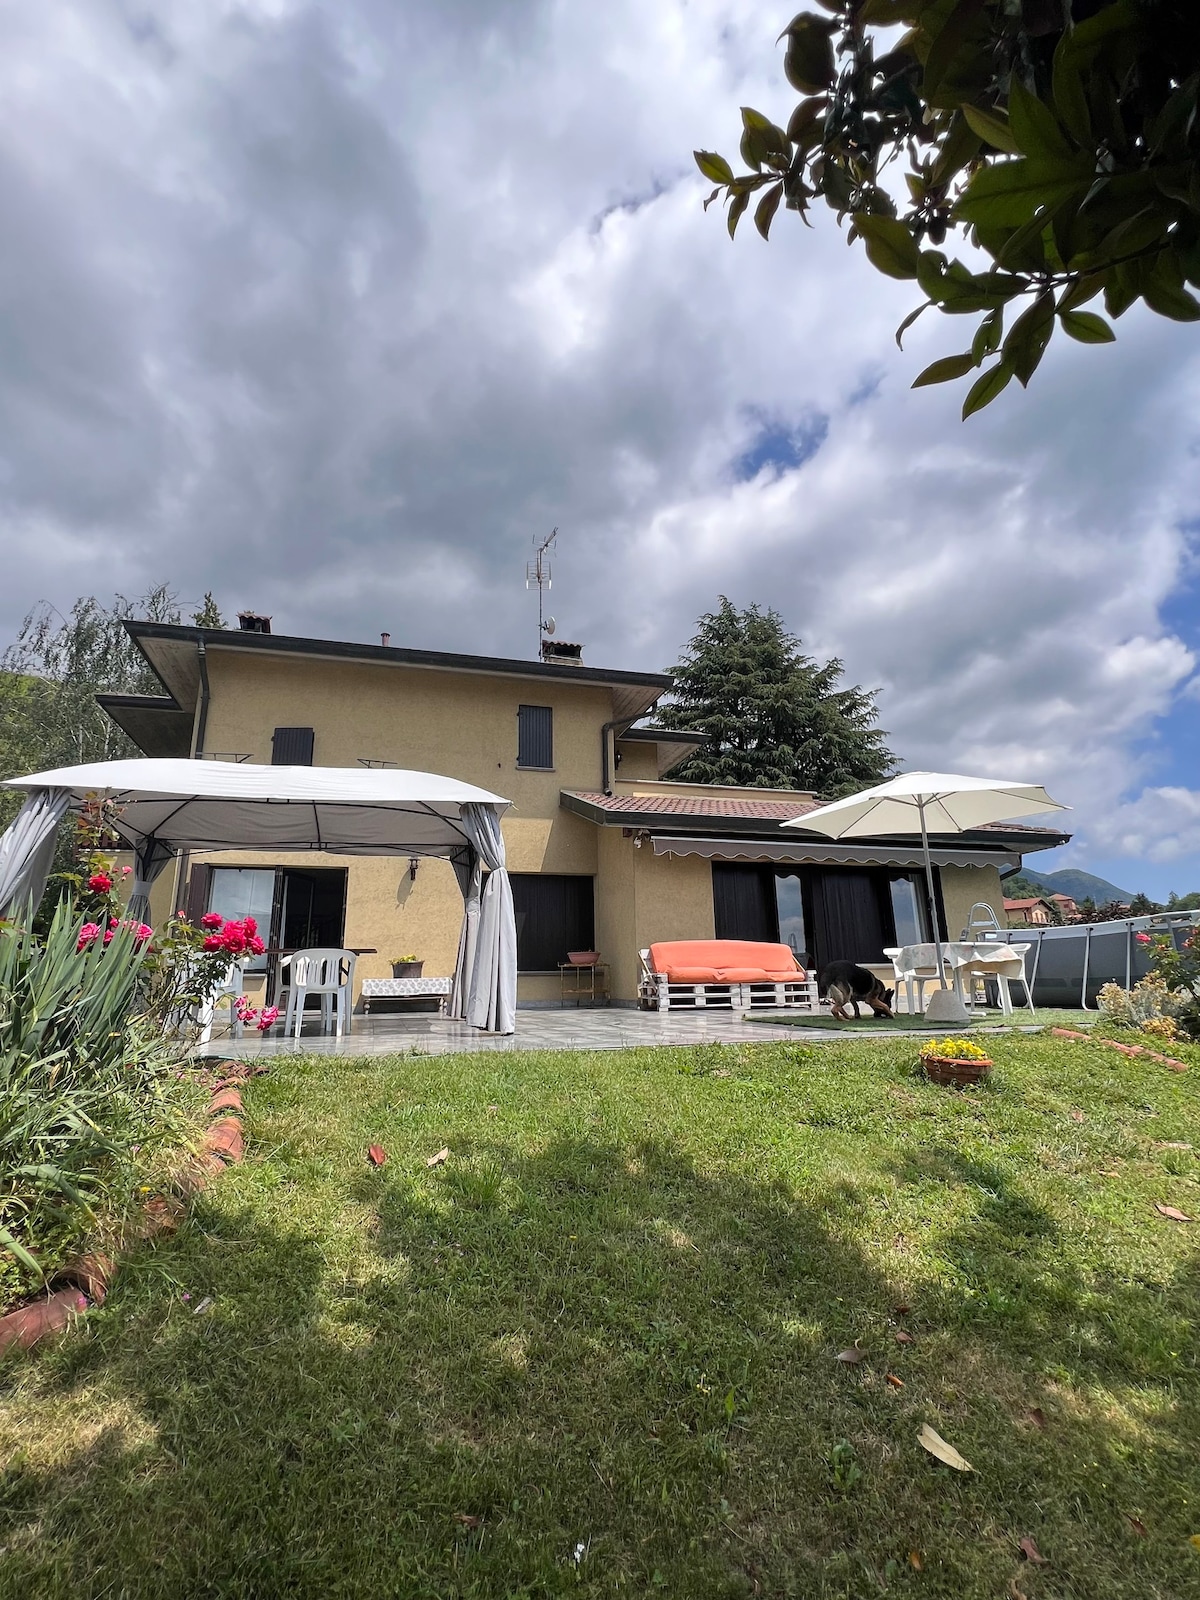 Aizurro Vacation Rentals & Homes - Lombardia, Italy | Airbnb